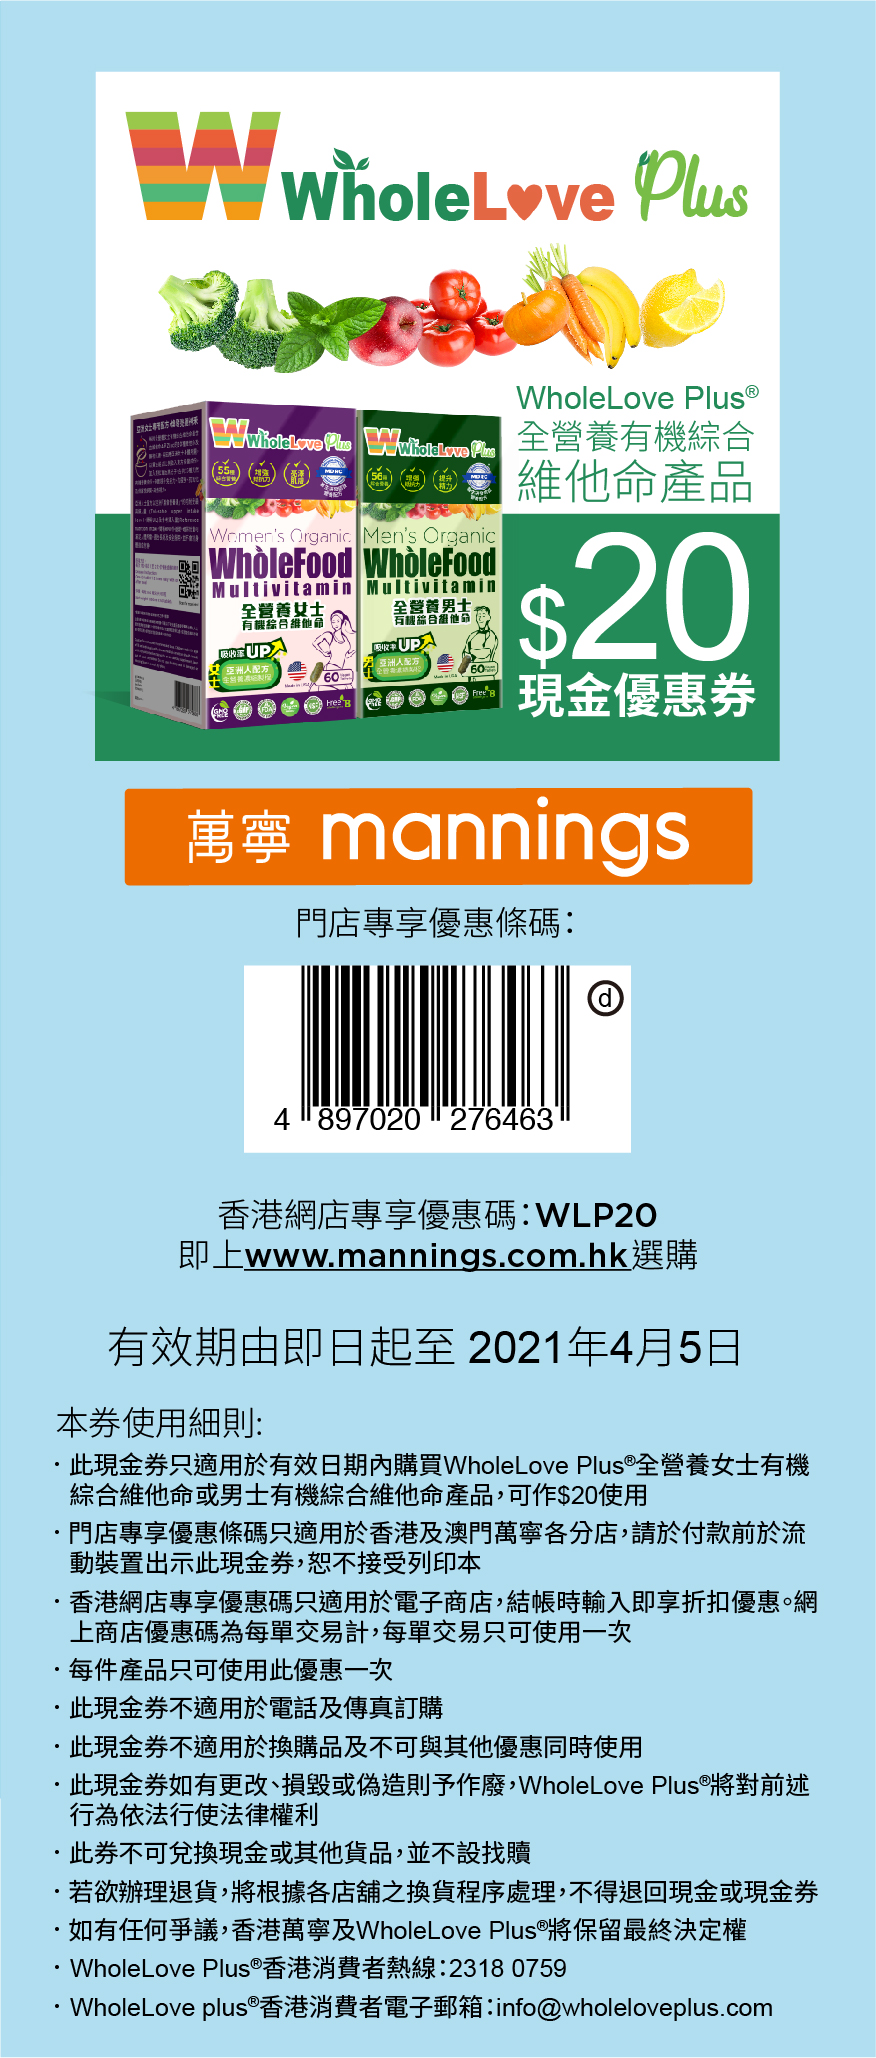 mannings WL Digital Coupon2021-02-01